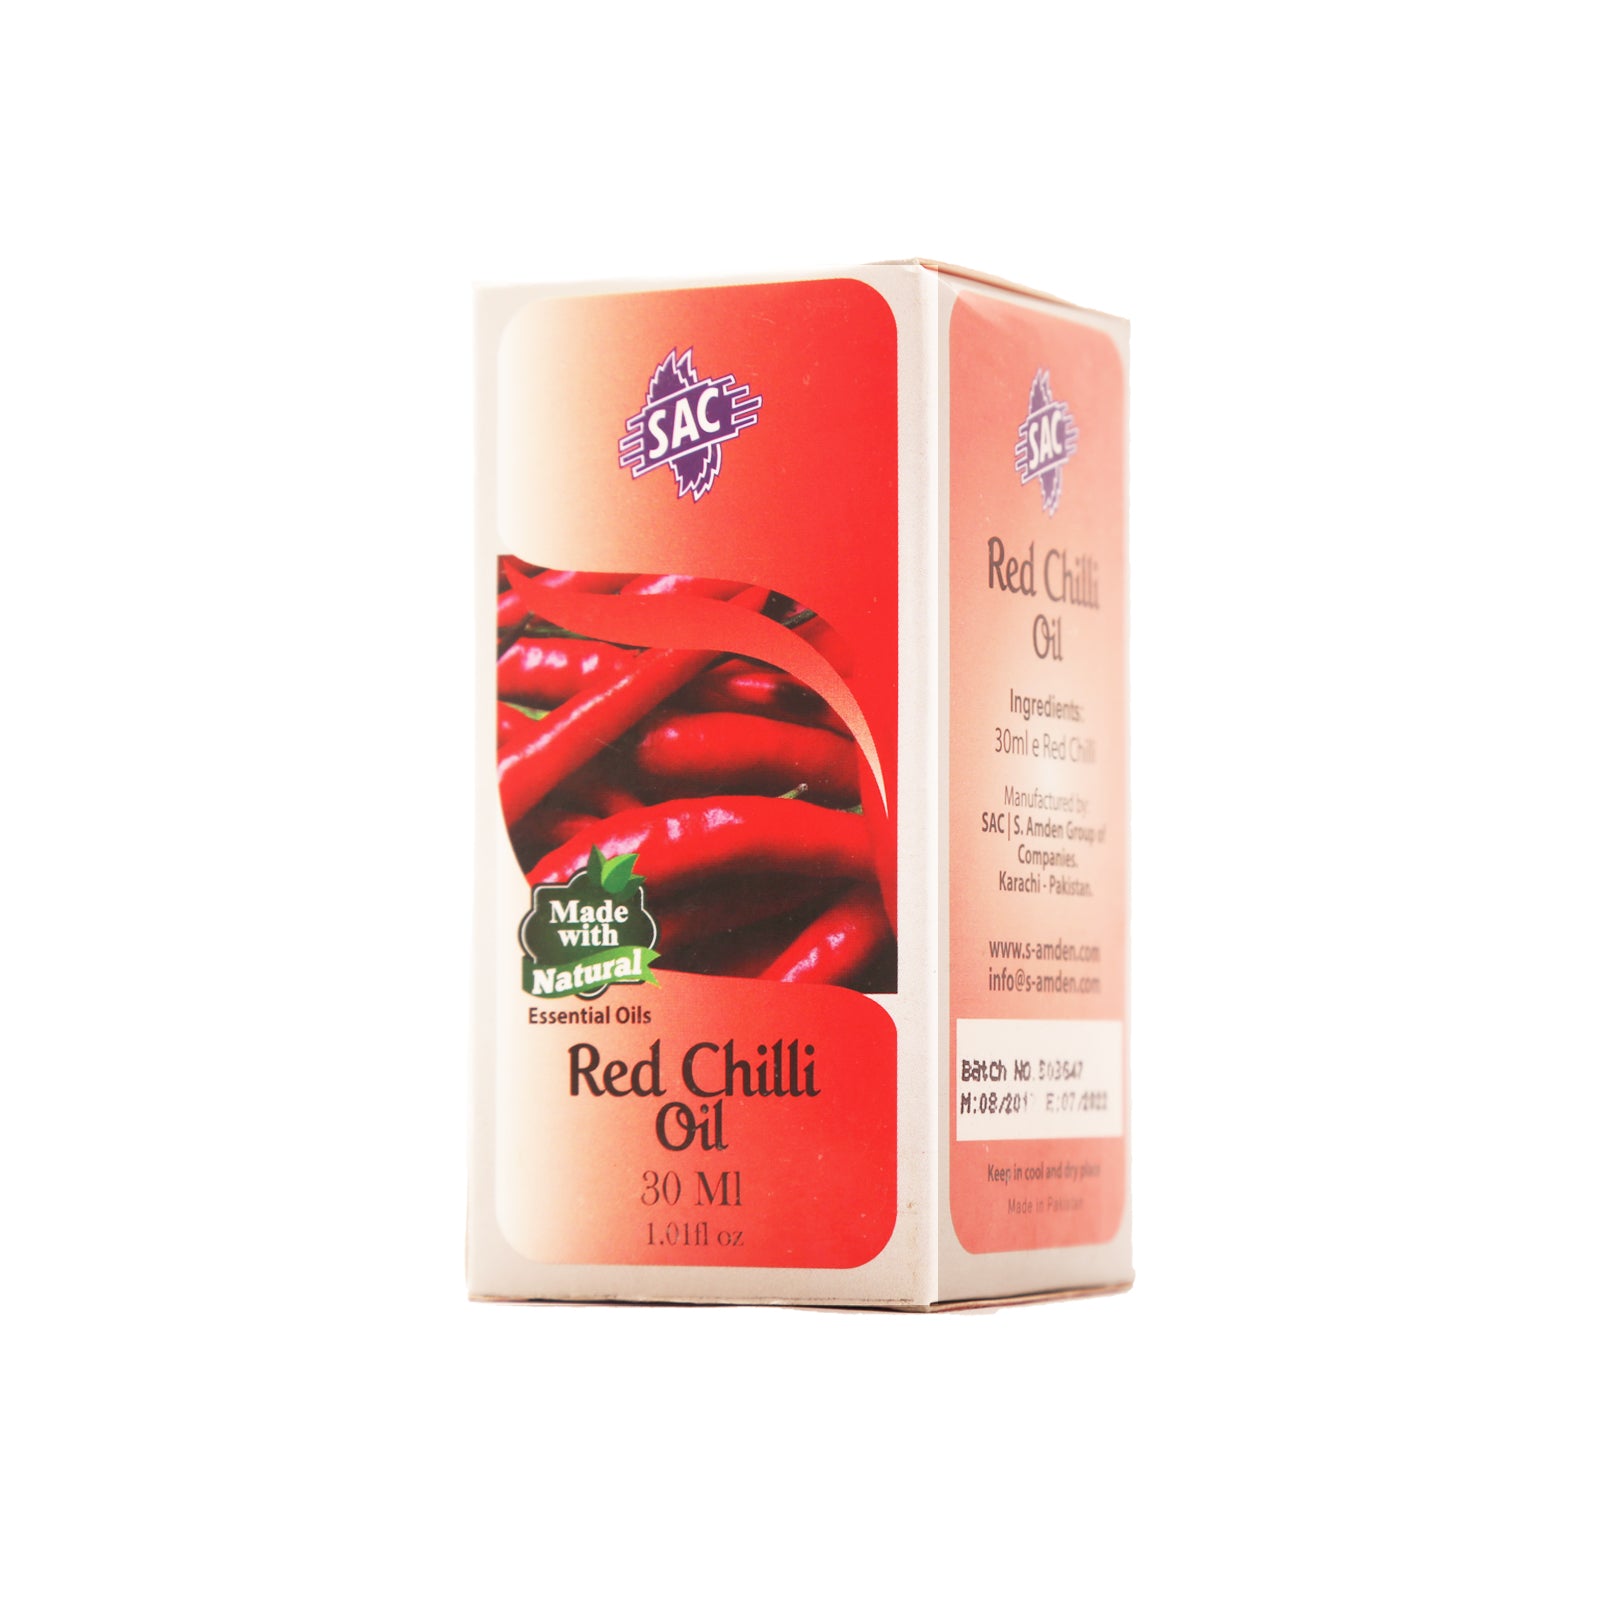 Red chili Oil 30ml